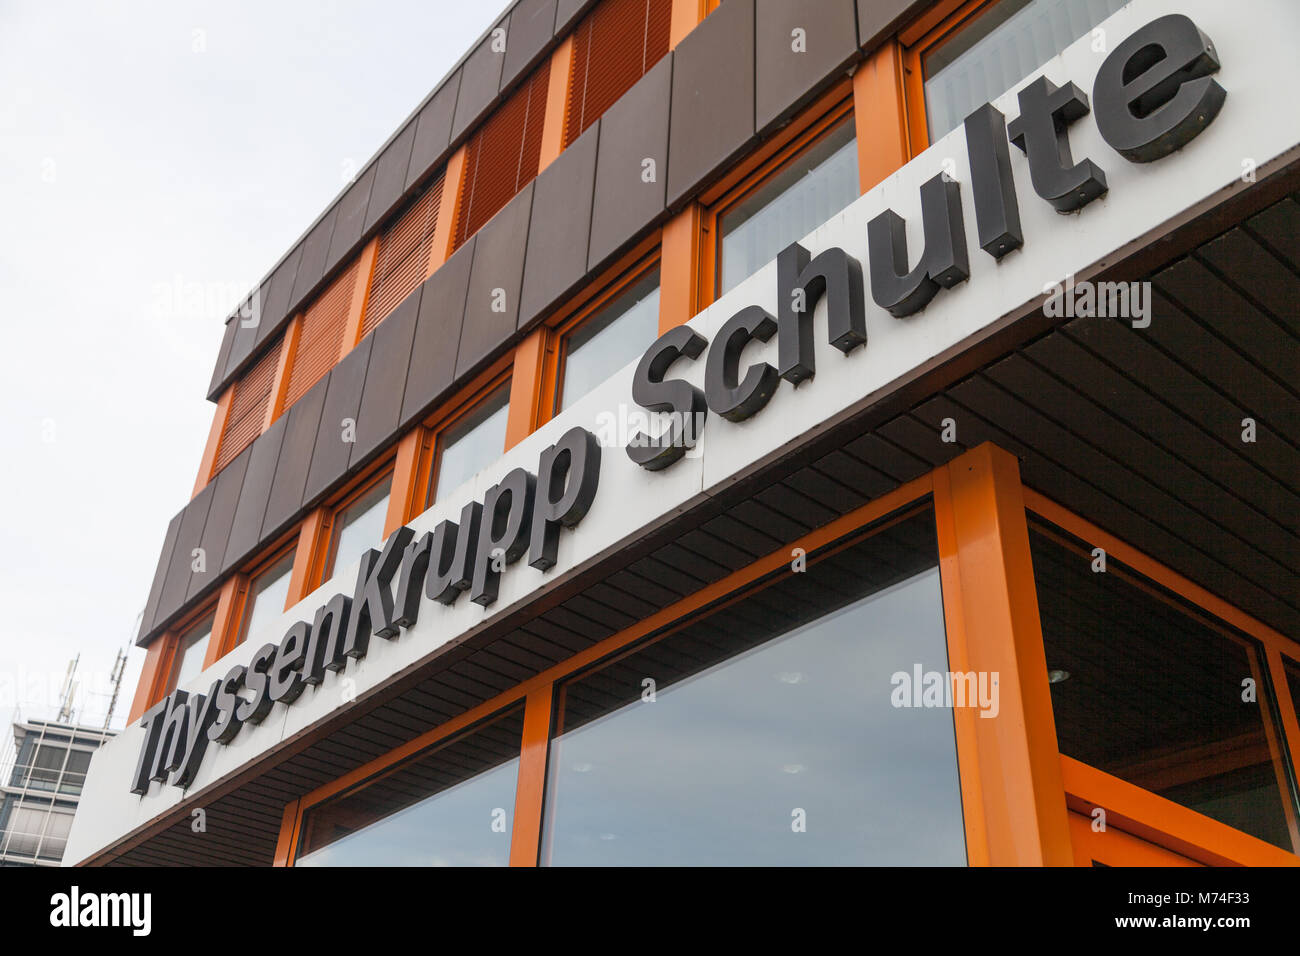 NUERNBERG / GERMANY - MARCH 4, 2018: German steel producer ThyssenKrupp logo on entrance building. Stock Photo